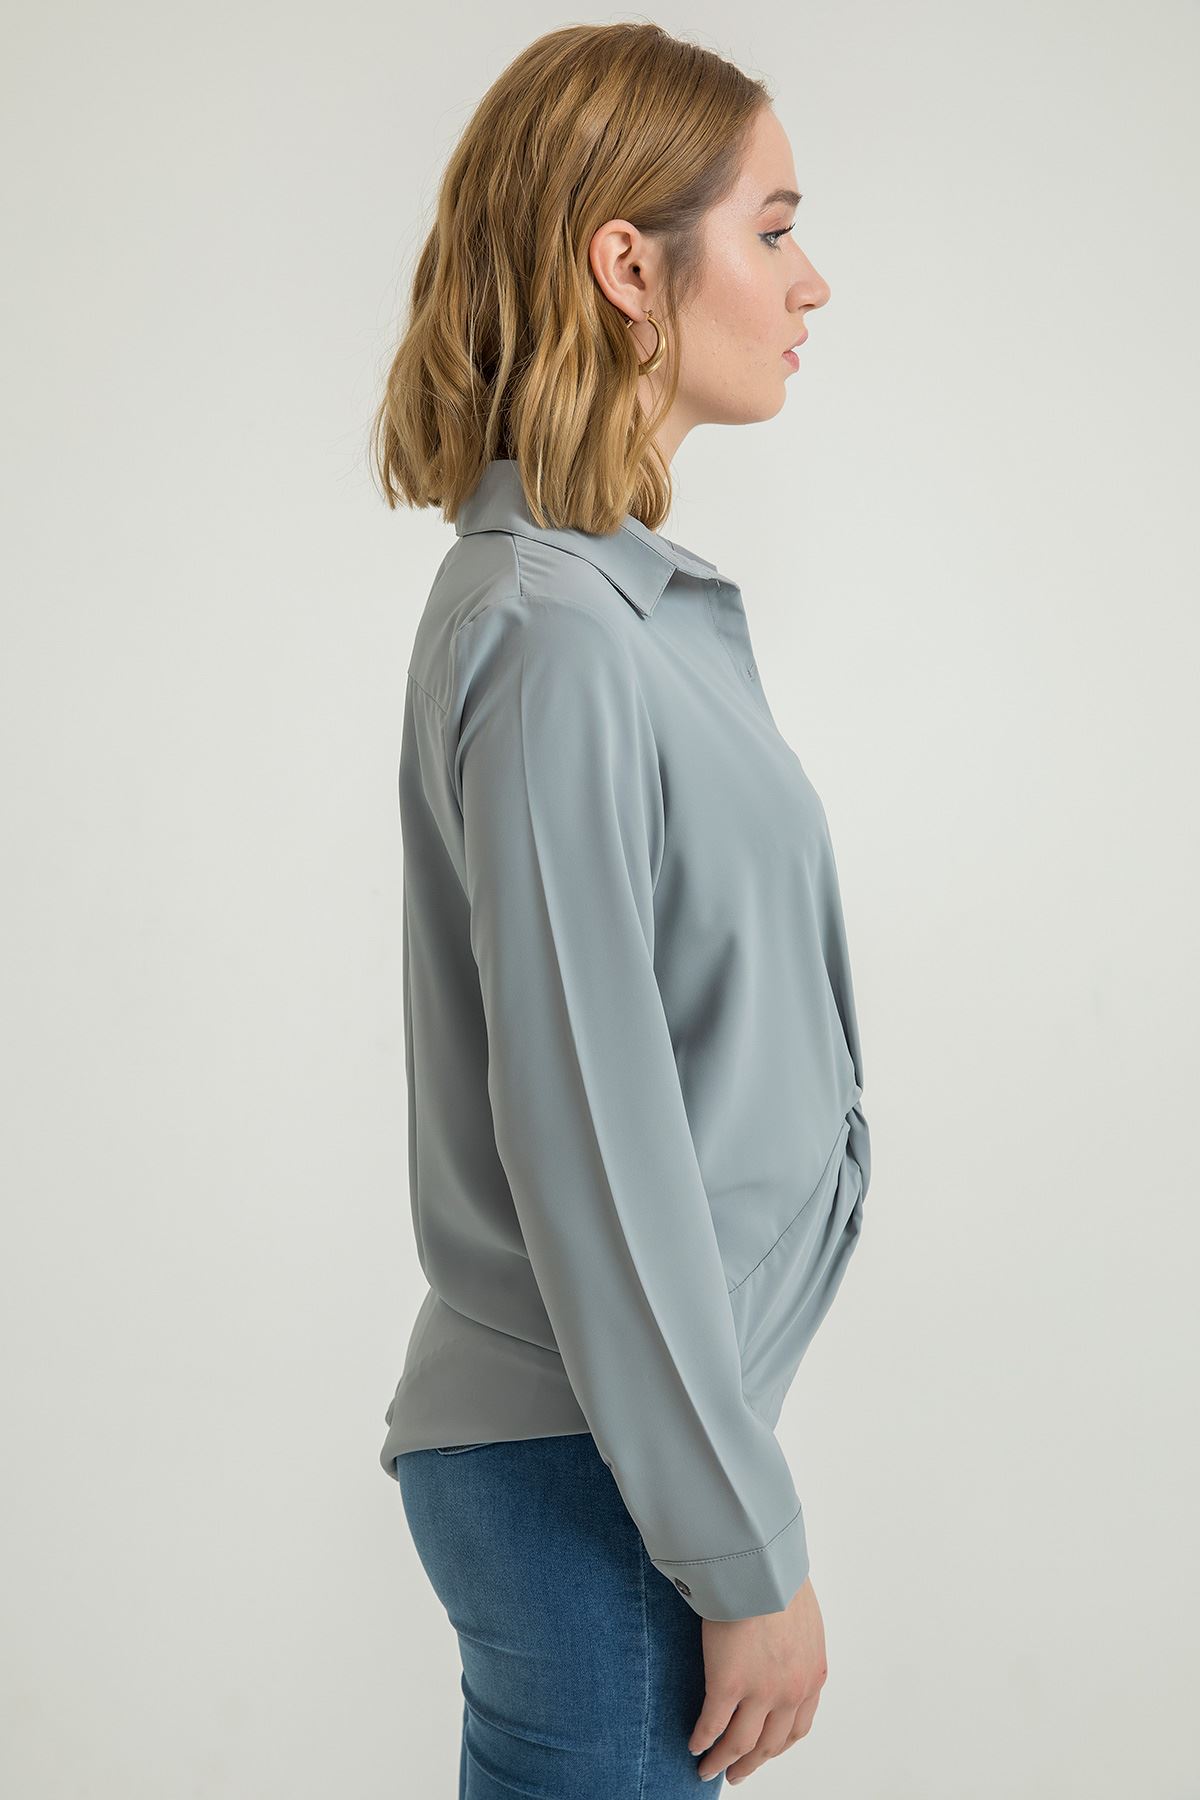 Jesica Fabric Long Sleeve Classical Button Front Women'S Shirt - Grey